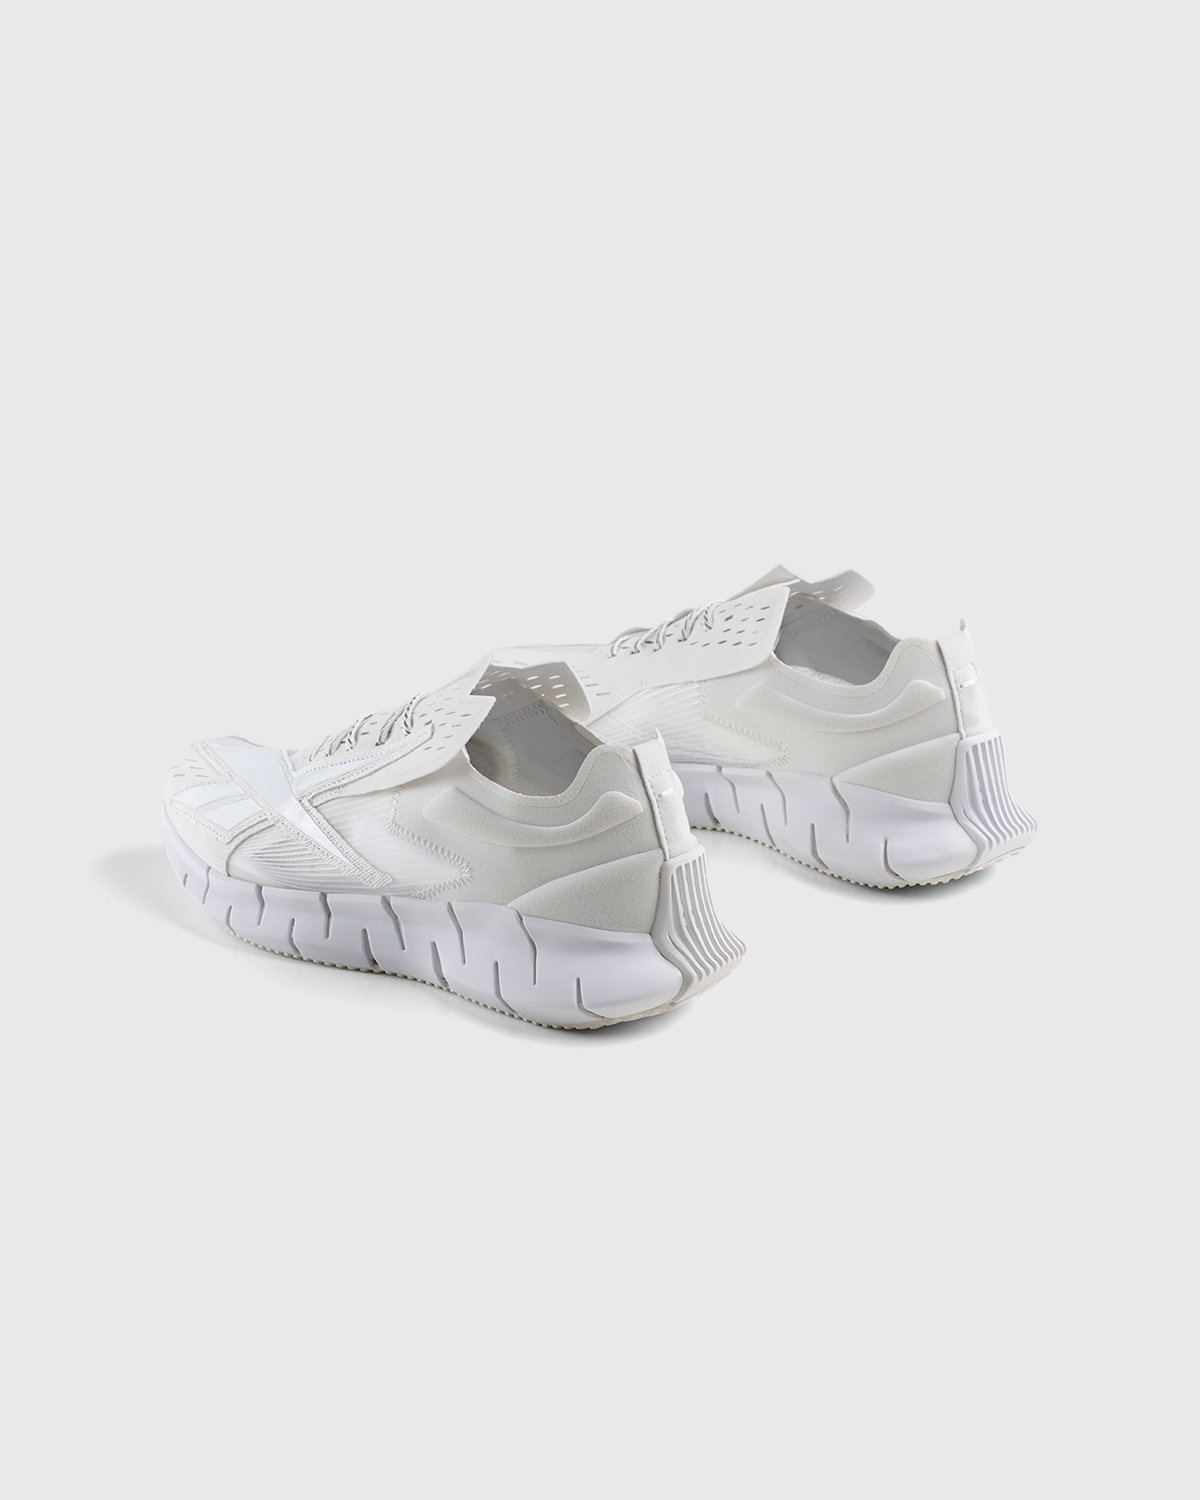 Reebok x Maison Margiela – Zig 3D Storm Memory Of White - Sneakers - White - Image 4